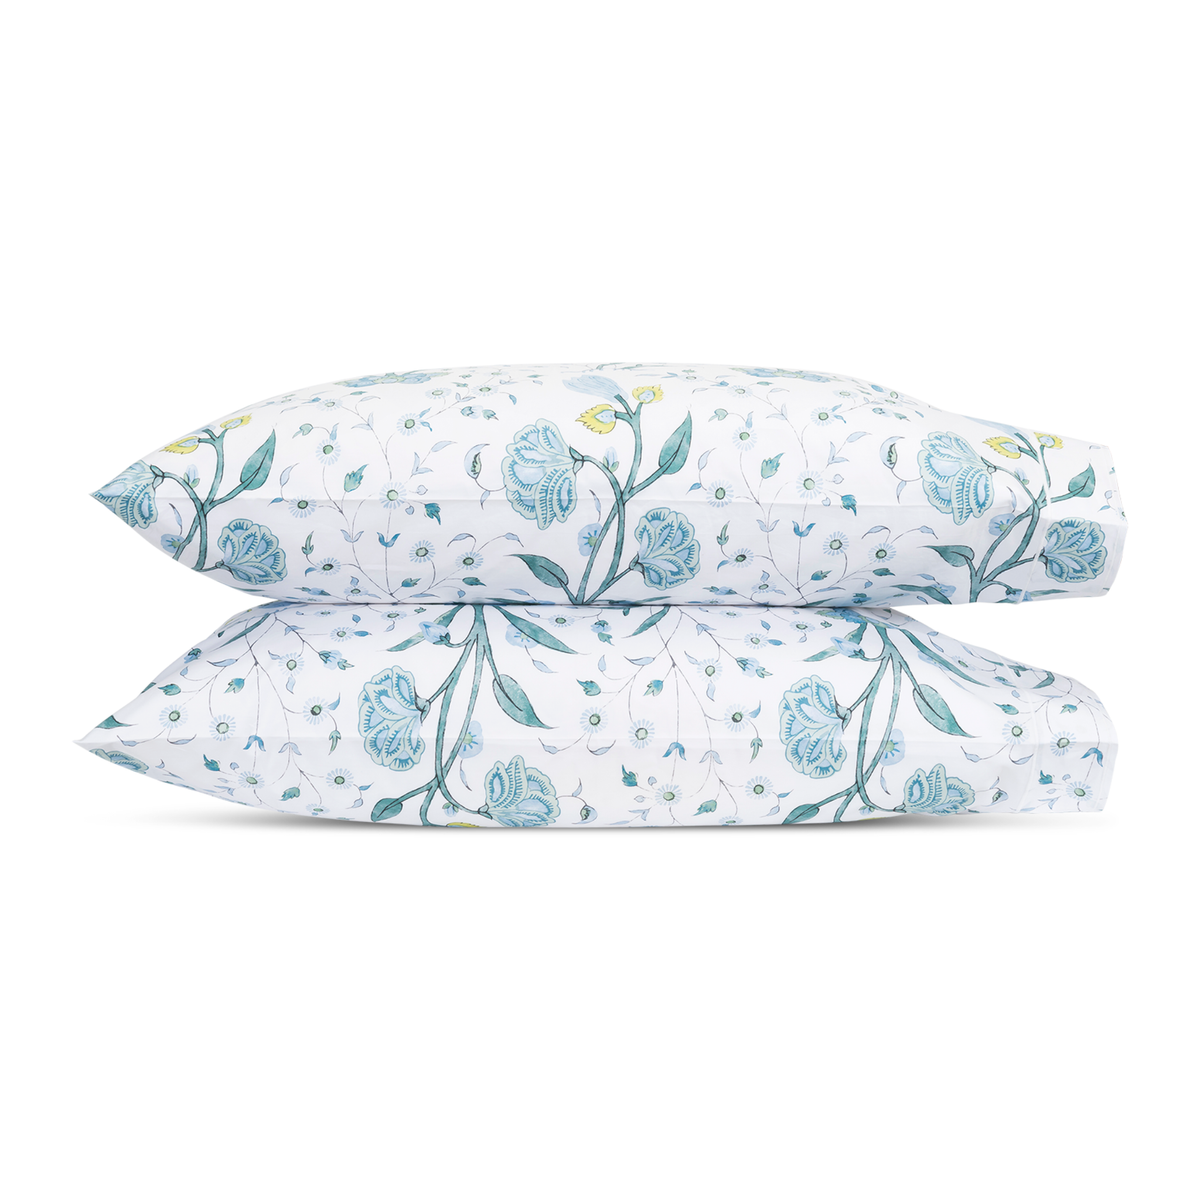 A Pair of Pillowcases of Matouk Schumacher Khilan Bedding Color Blue